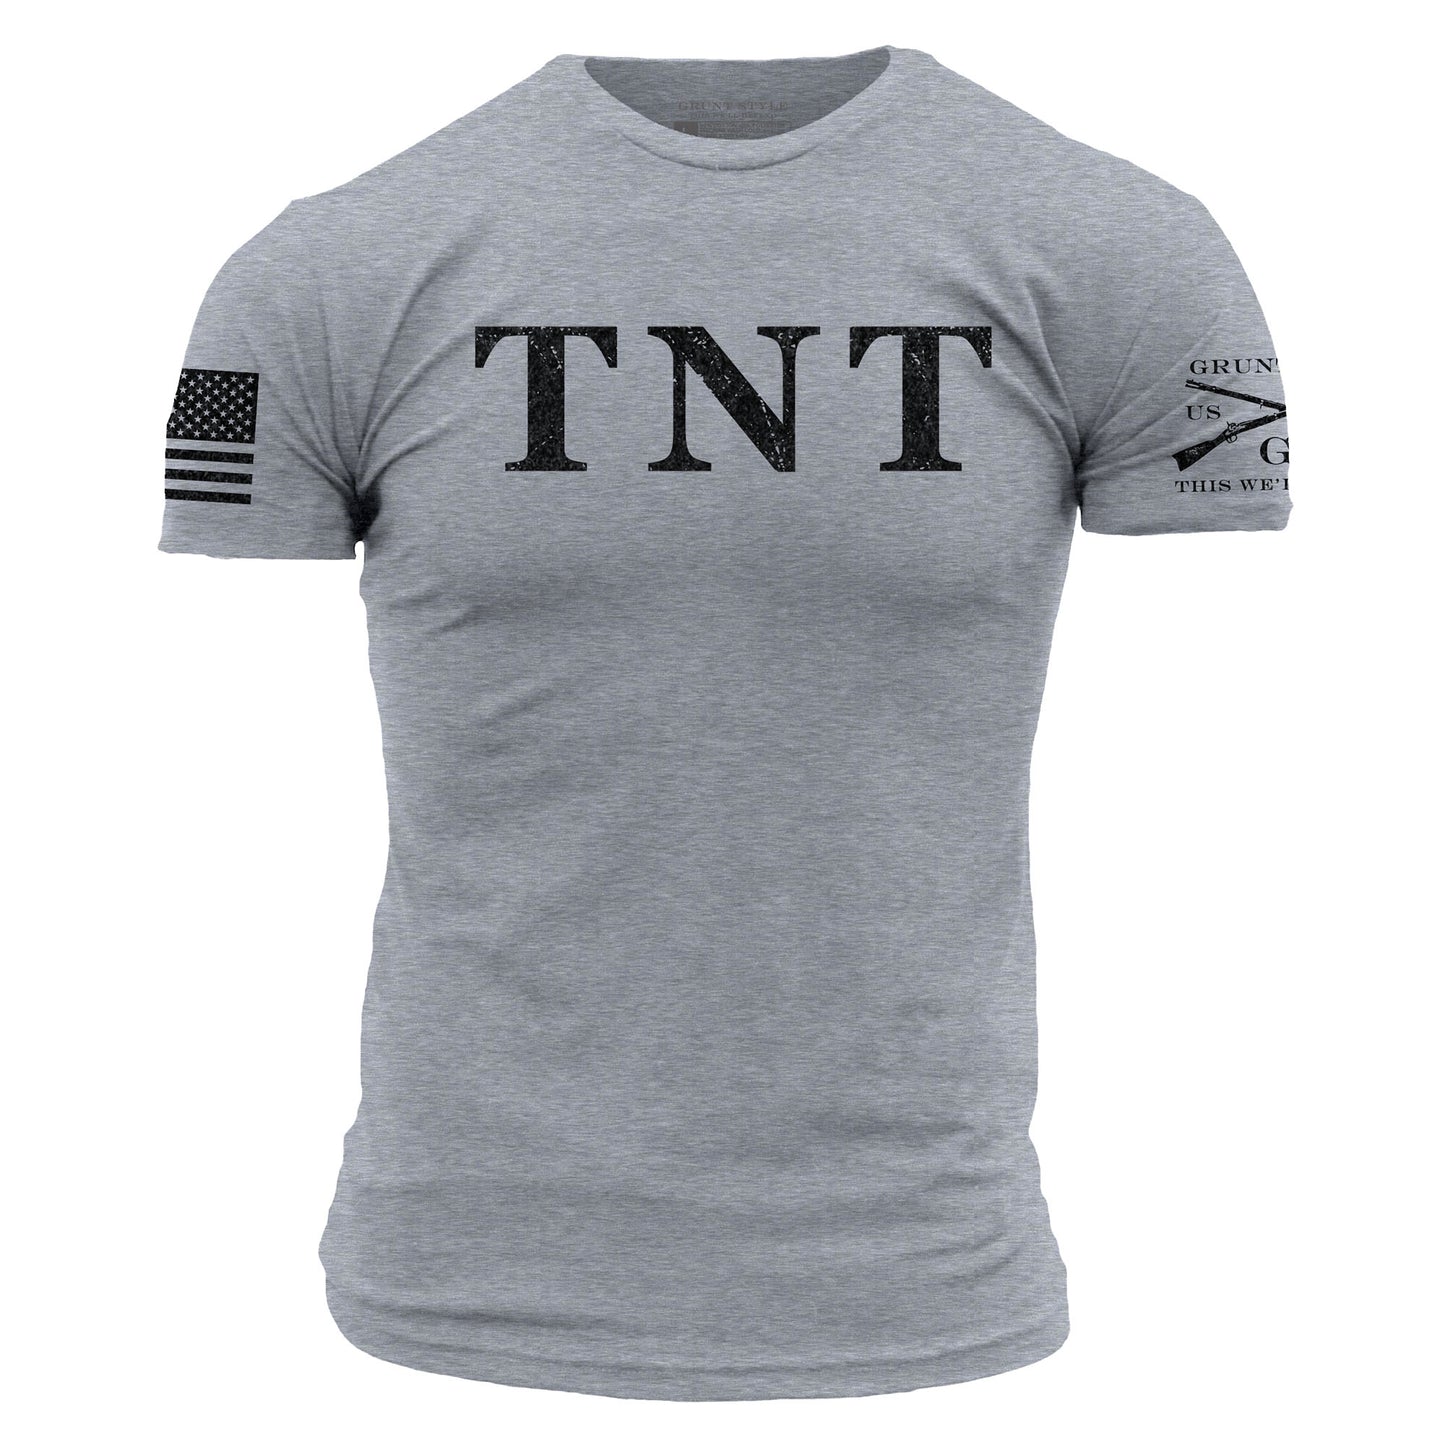 Military Shirt - TNT Definition